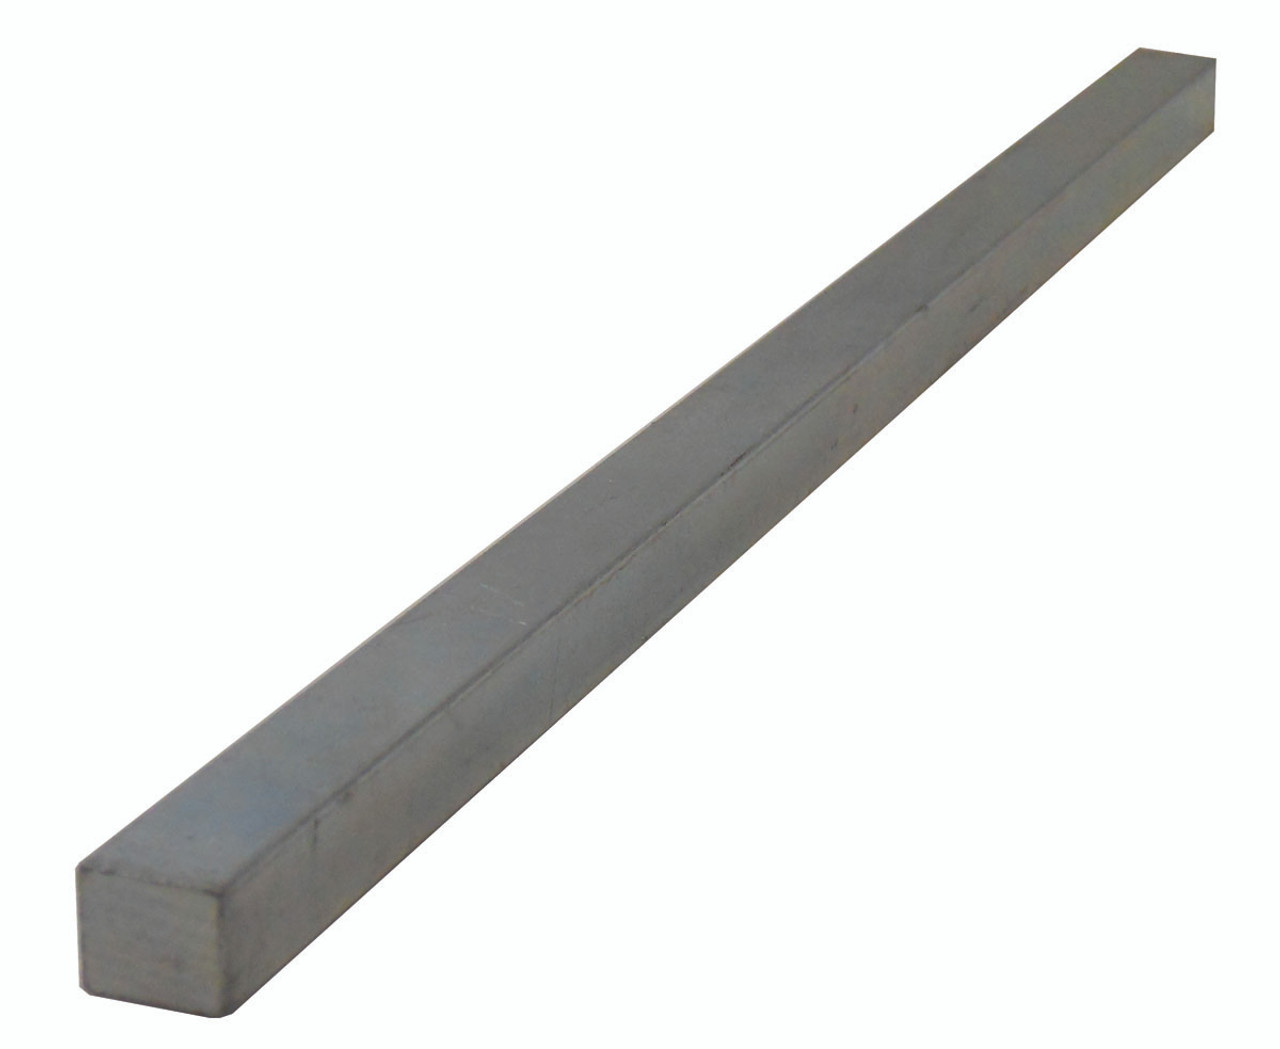 Rectangular SAE 3/4 x 1 x 36" Zinc Plated Steel Keystock  .750-1000-36